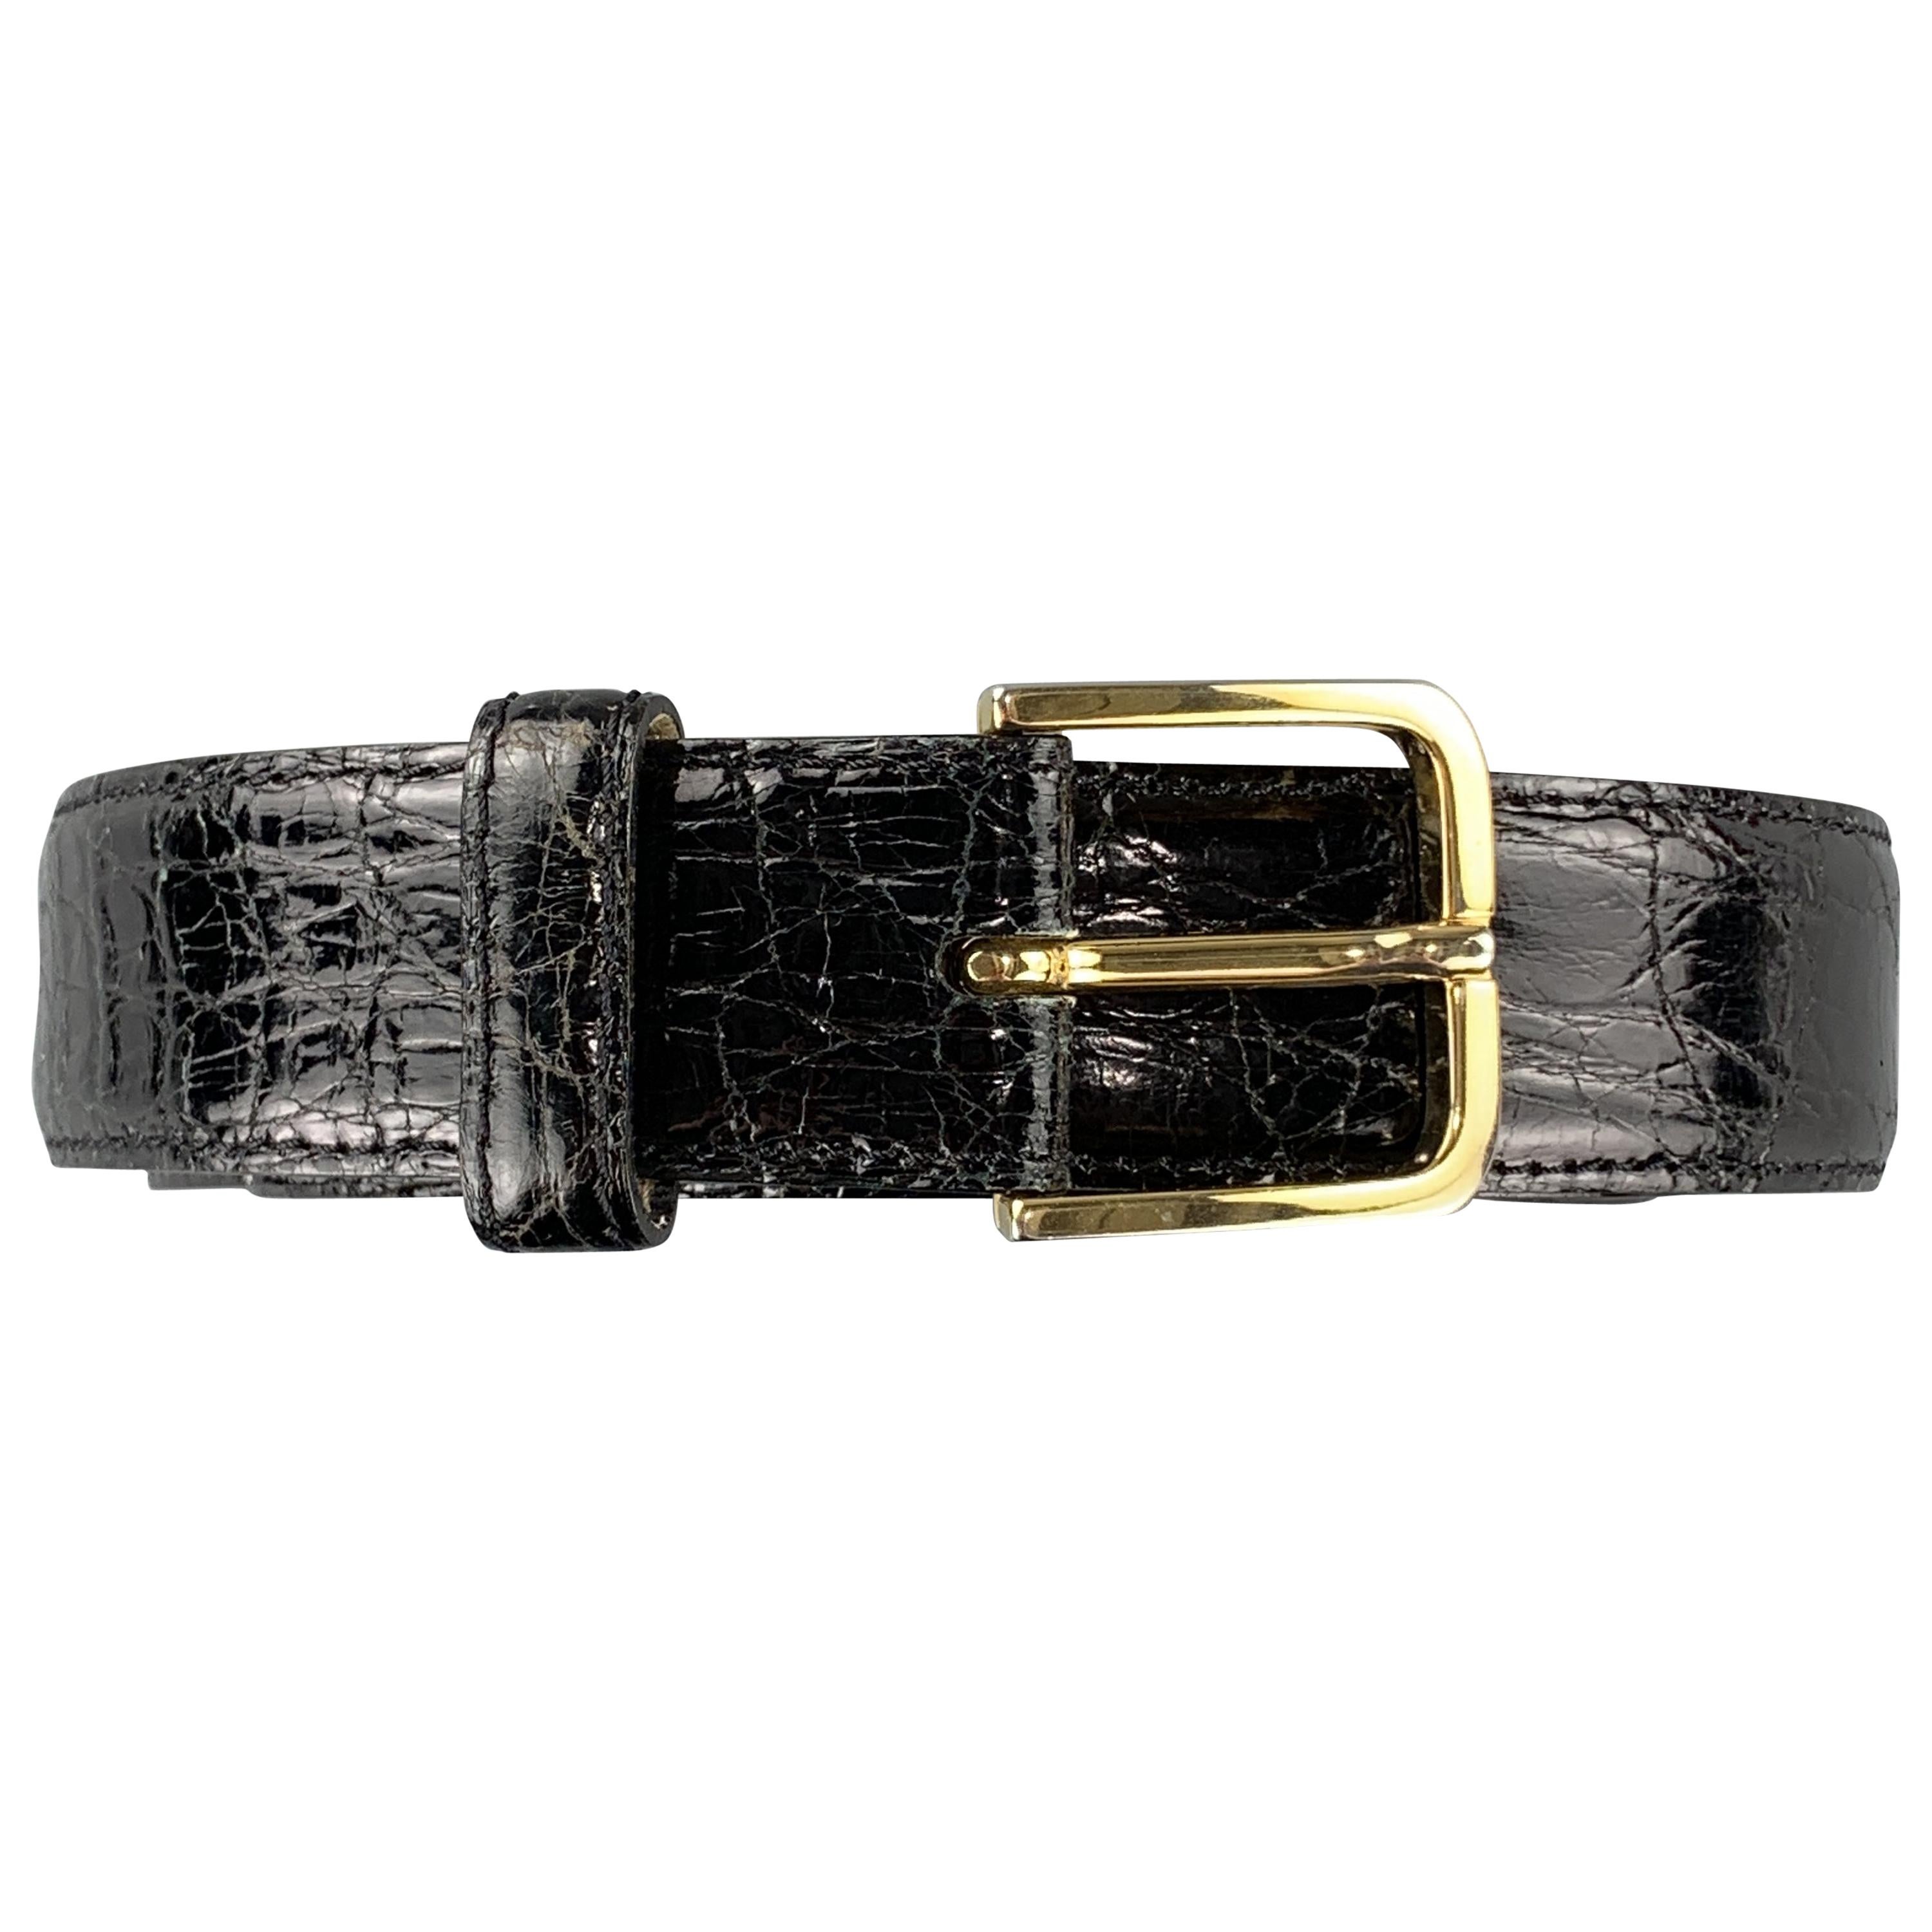 SULKA Size 36 Black Crocodile Patent Leather Belt